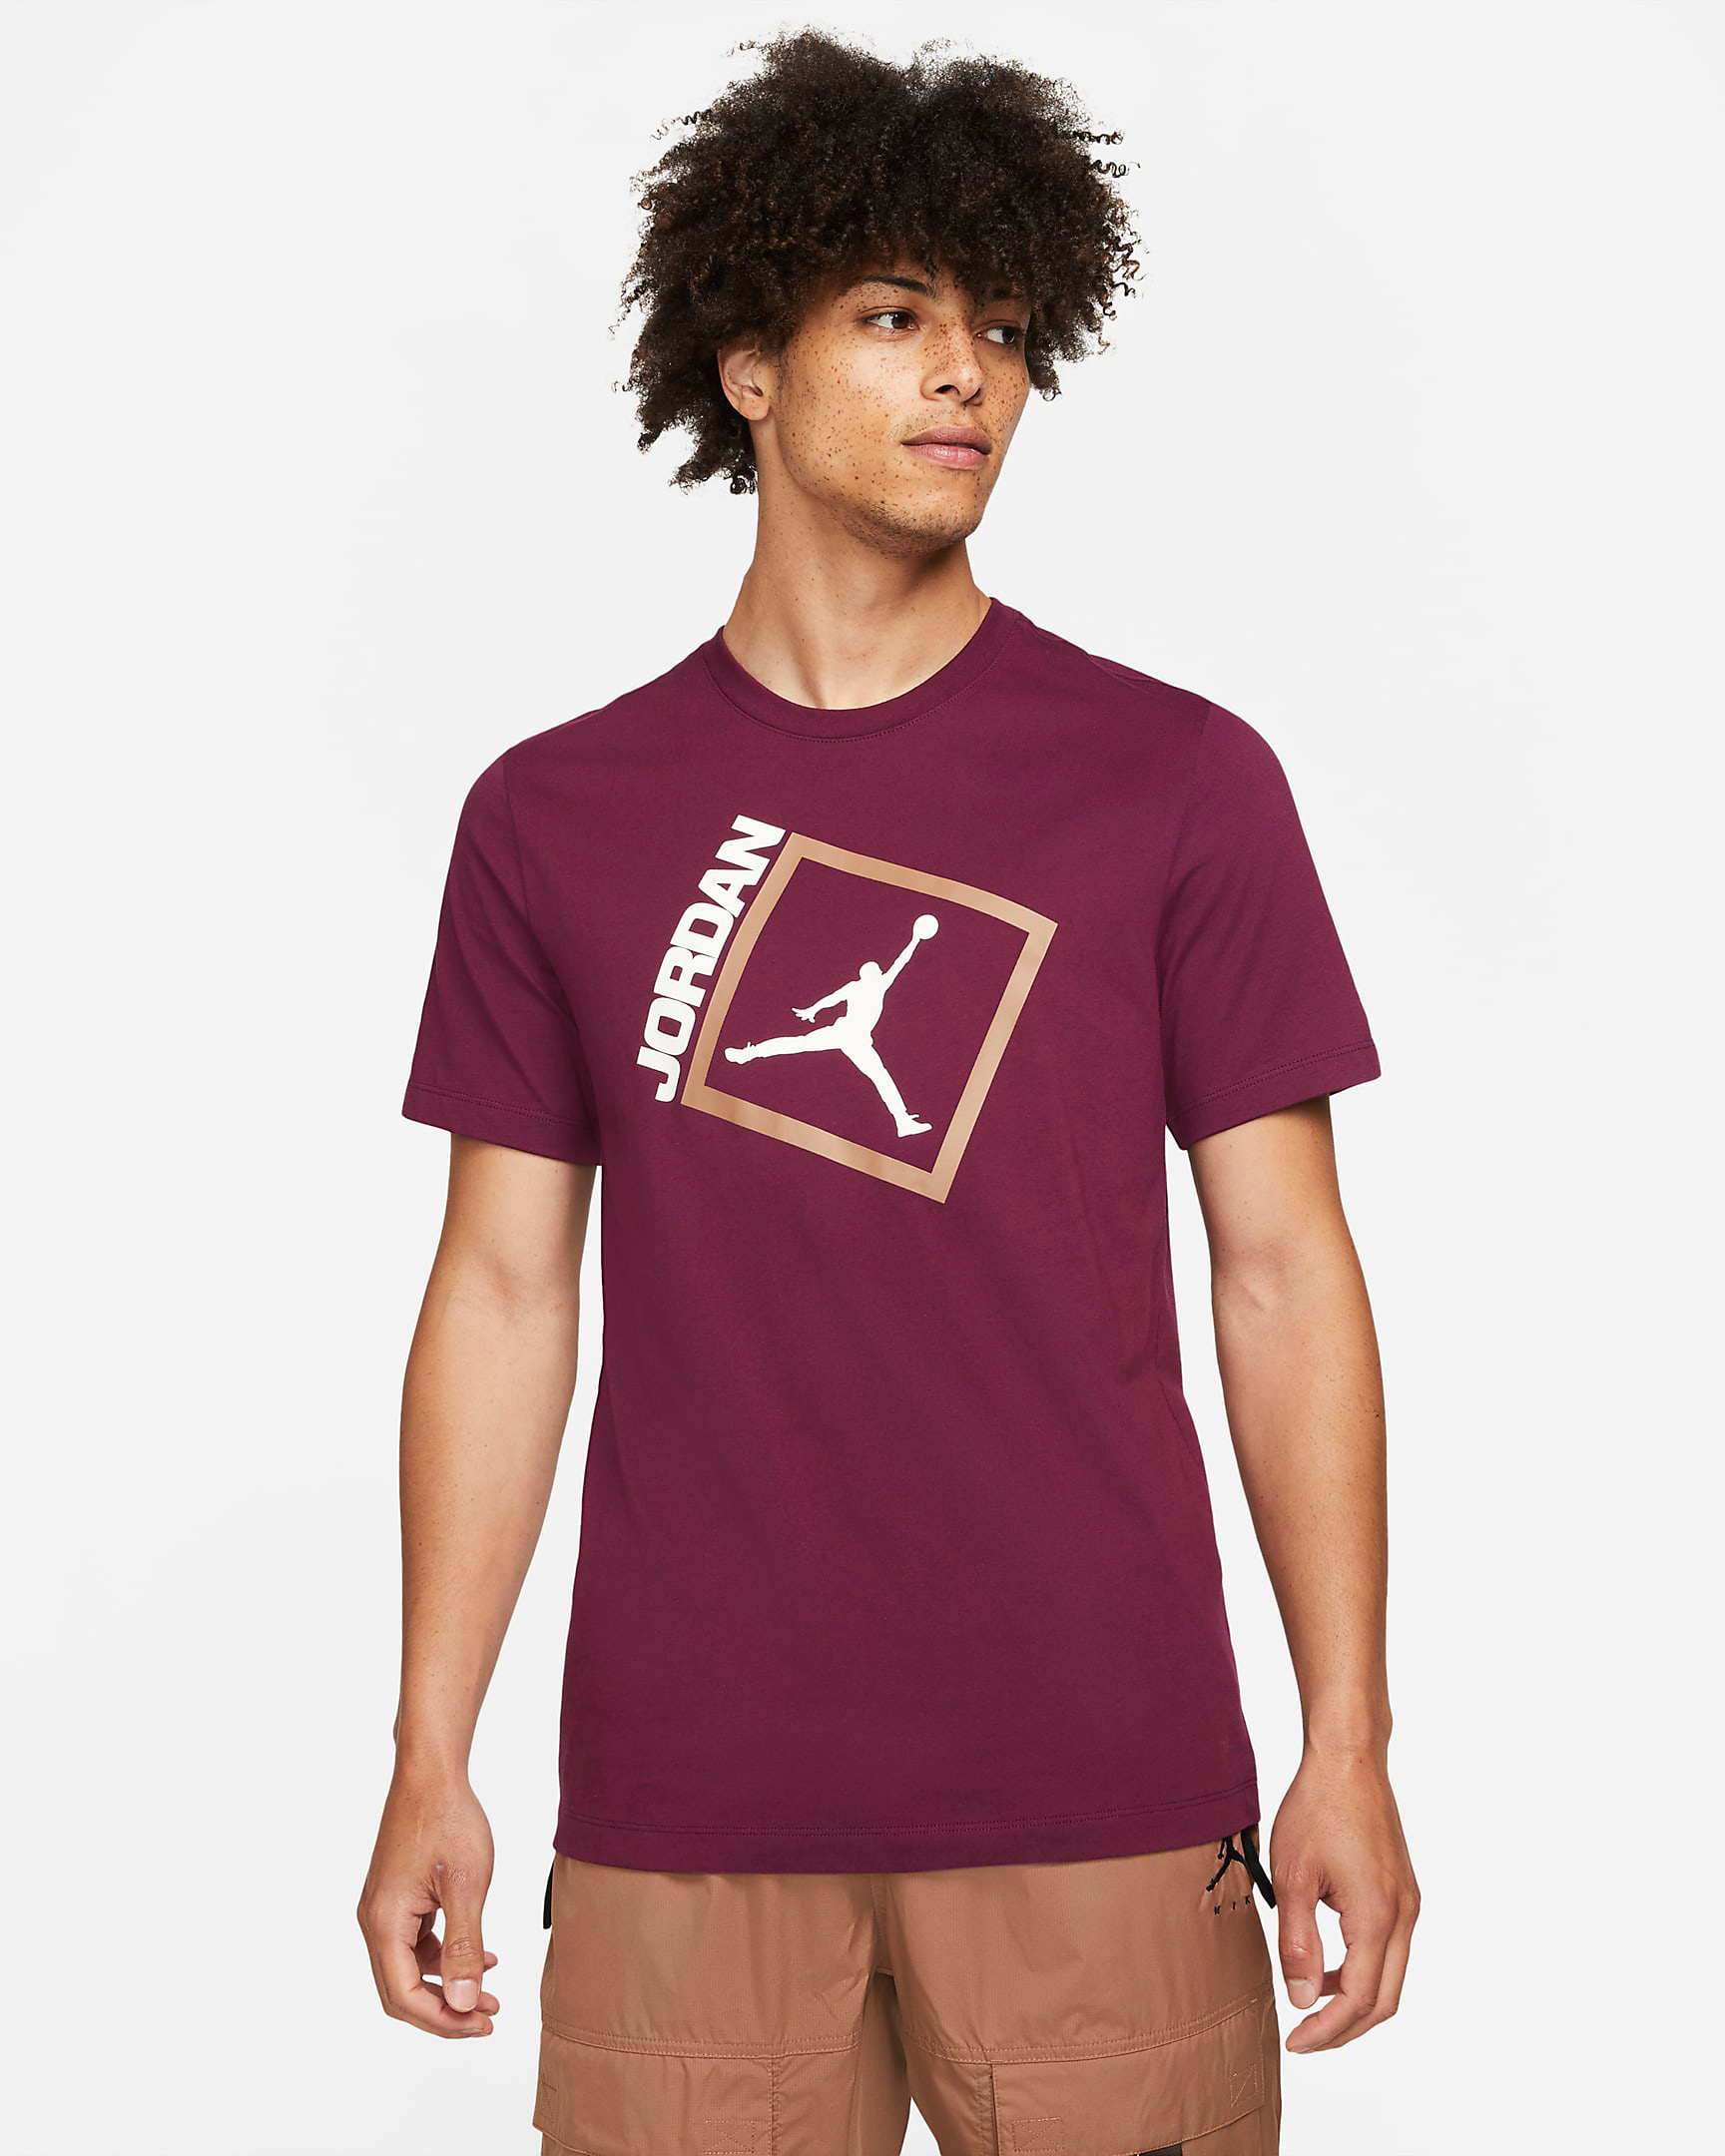 Air Jordan 6 Bordeaux Matching Shirt